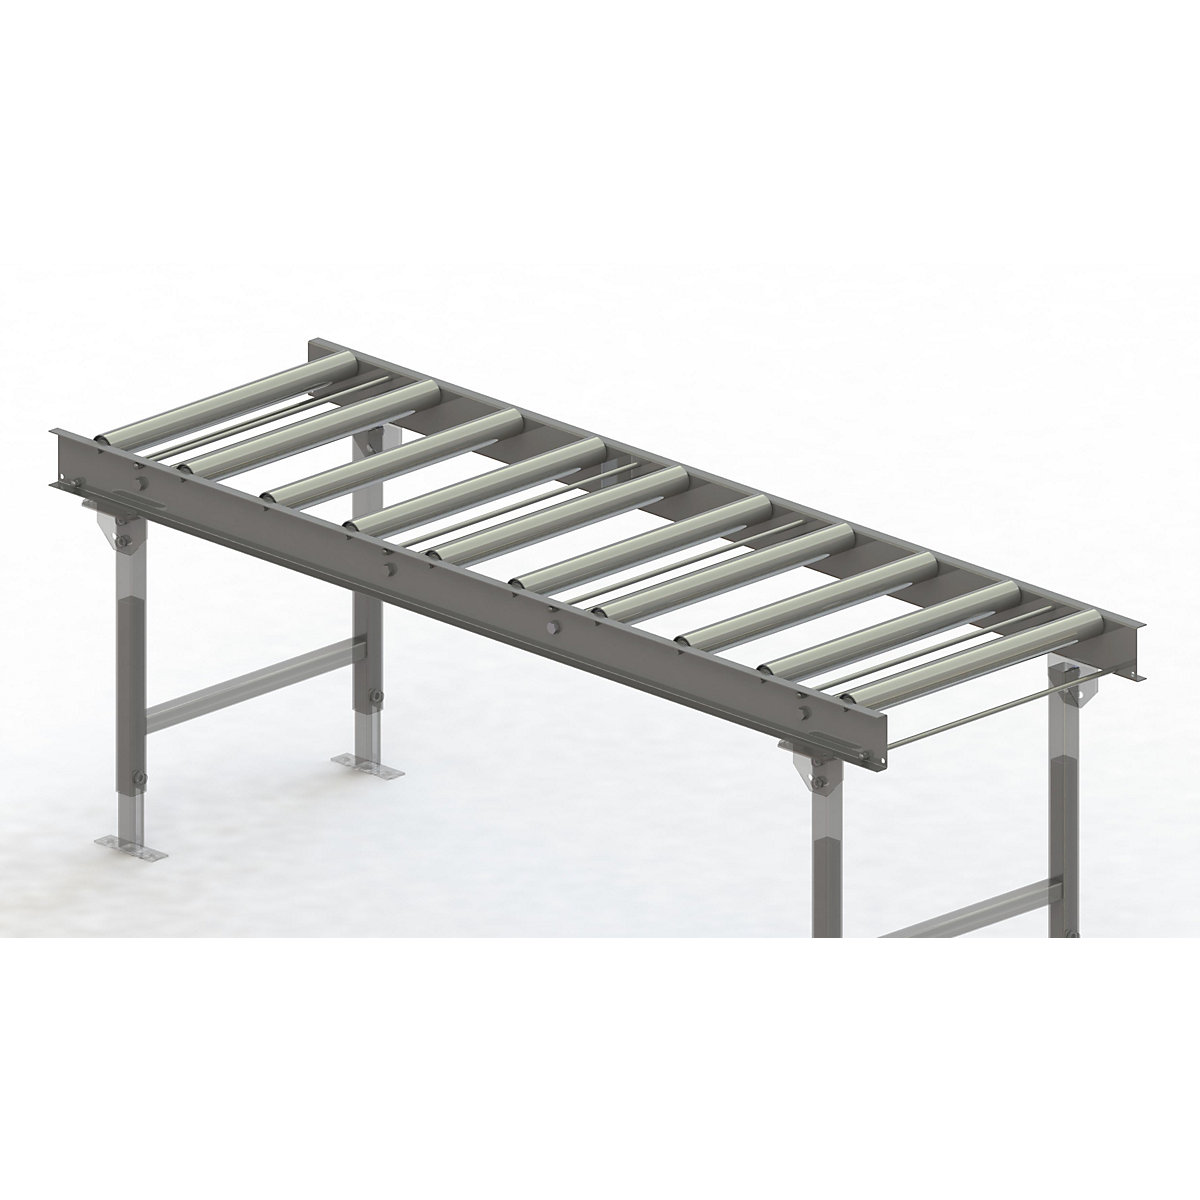 Gura – Roller conveyor, steel frame with zinc plated steel rollers, track width 600 mm, distance between axles 200 mm, length 2 m